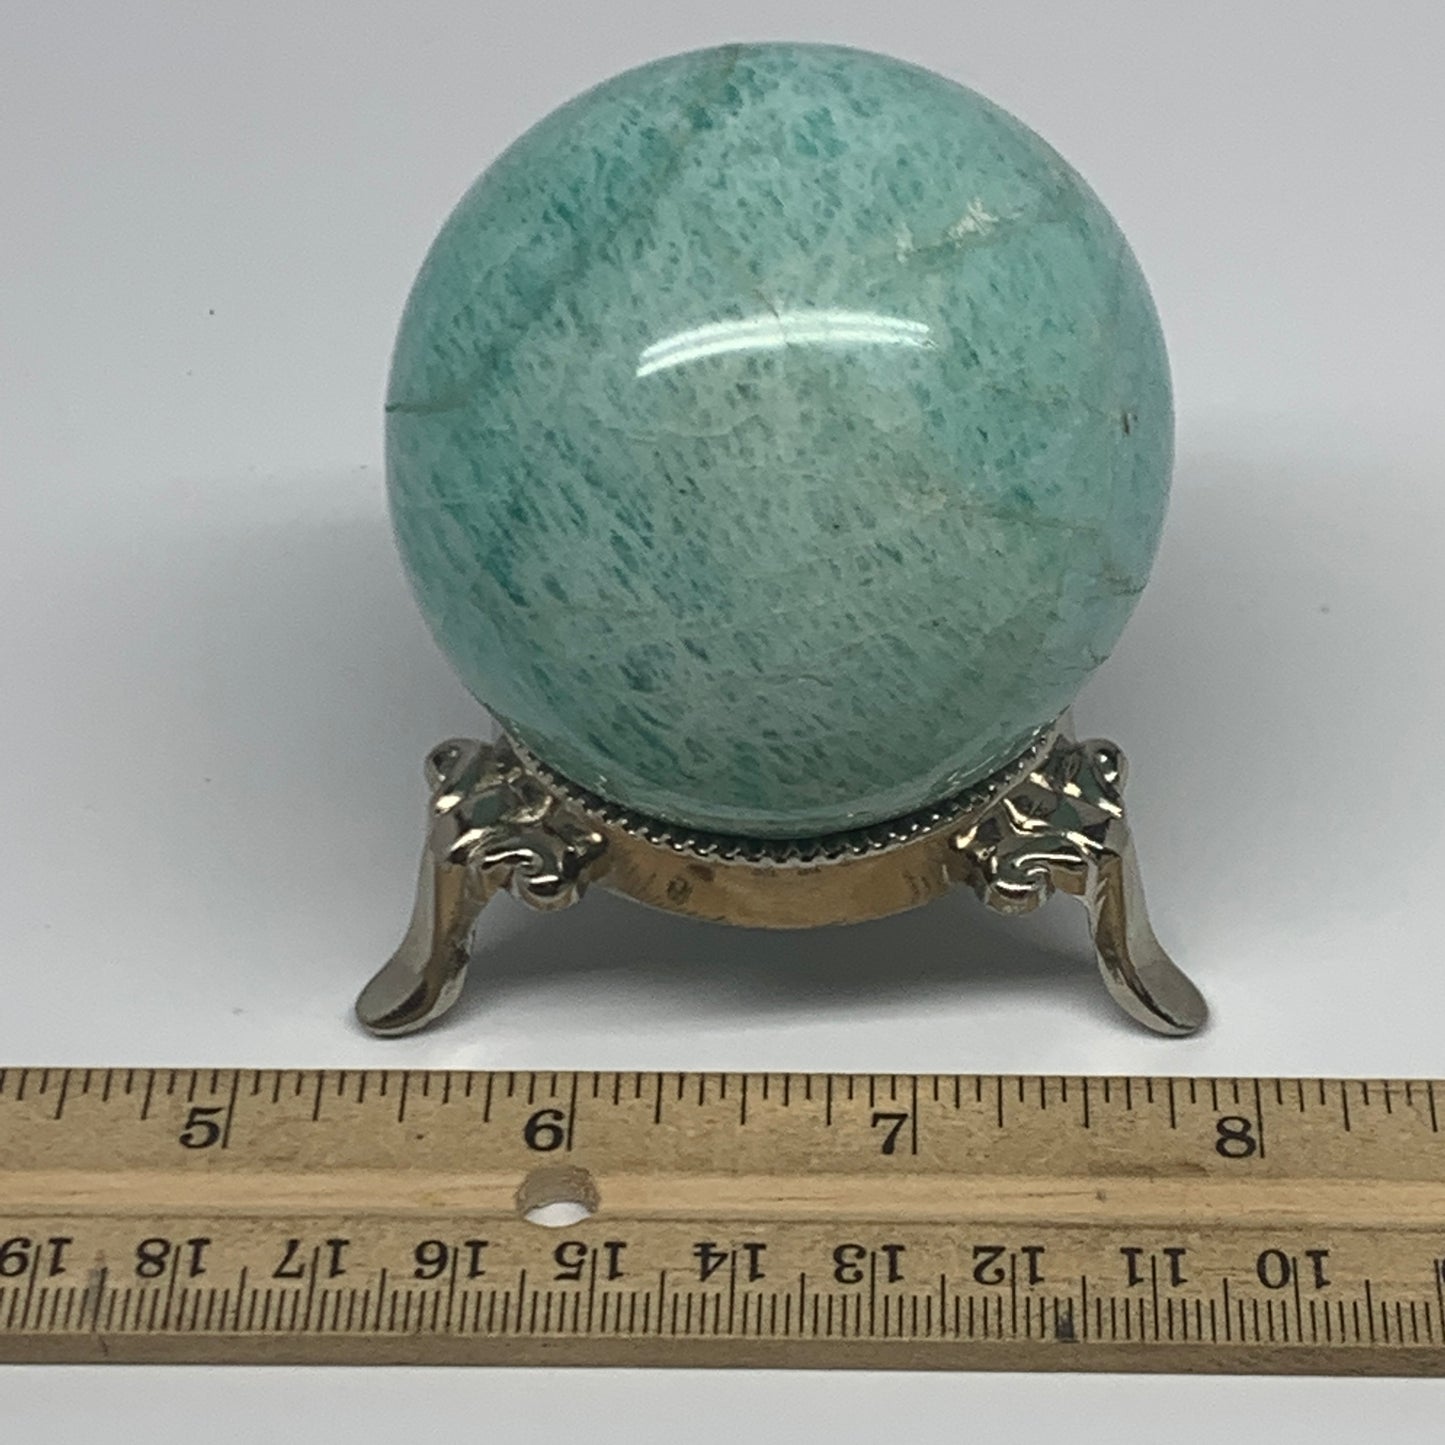 262.1g, 2.3" (58mm), Amazonite Sphere Ball Gemstone from Madagascar, B15787